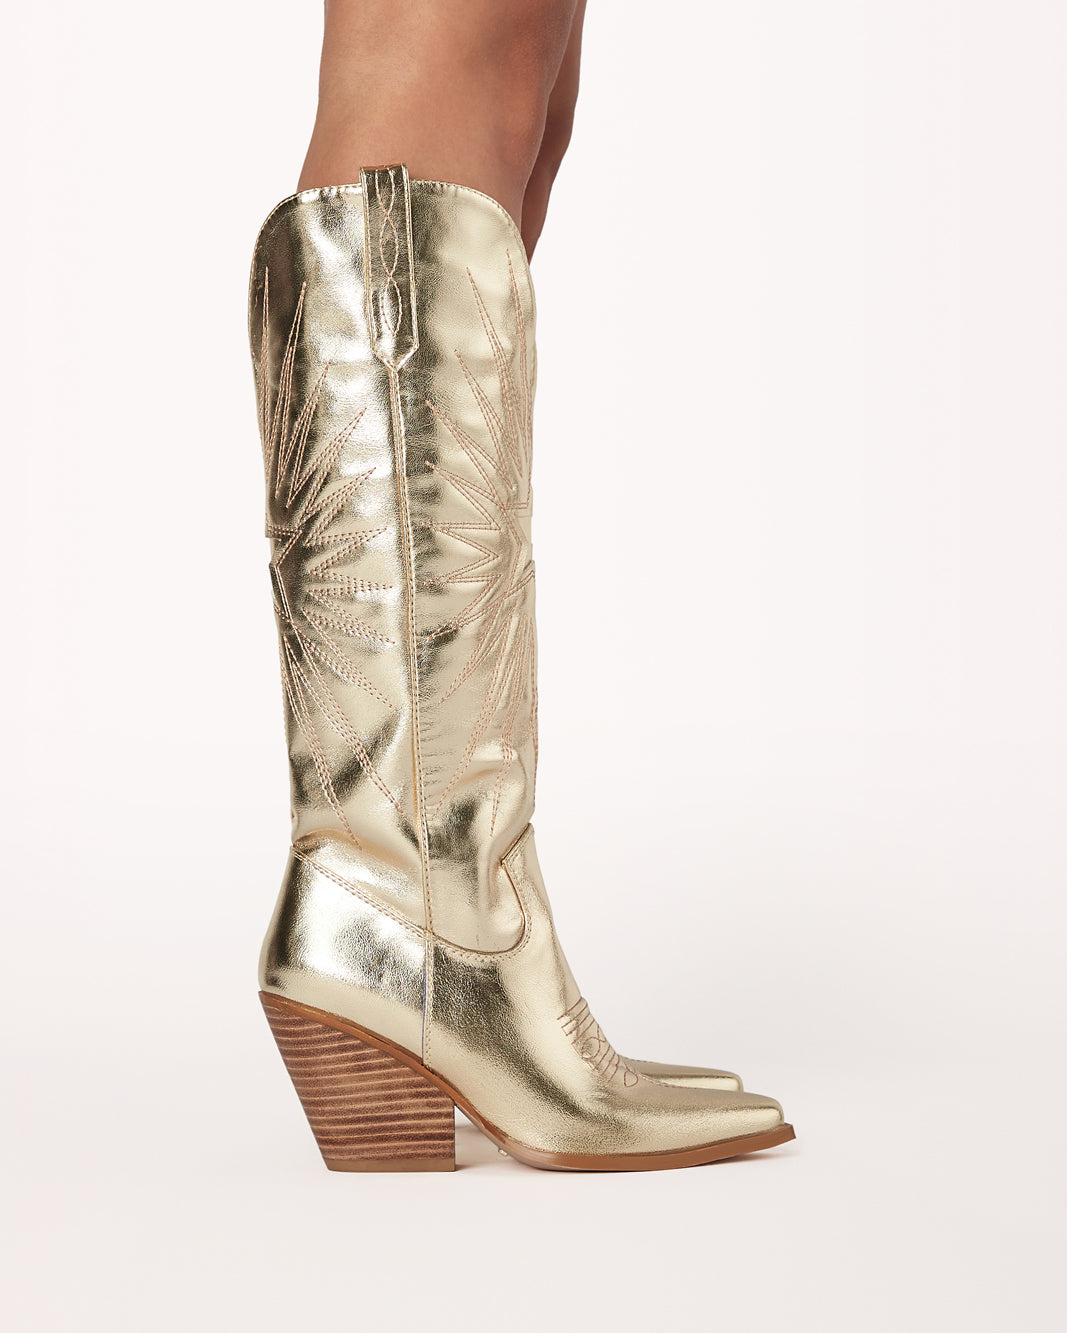 CONSTANCE - GOLD METALLIC-Boots-Billini-BILLINI USA